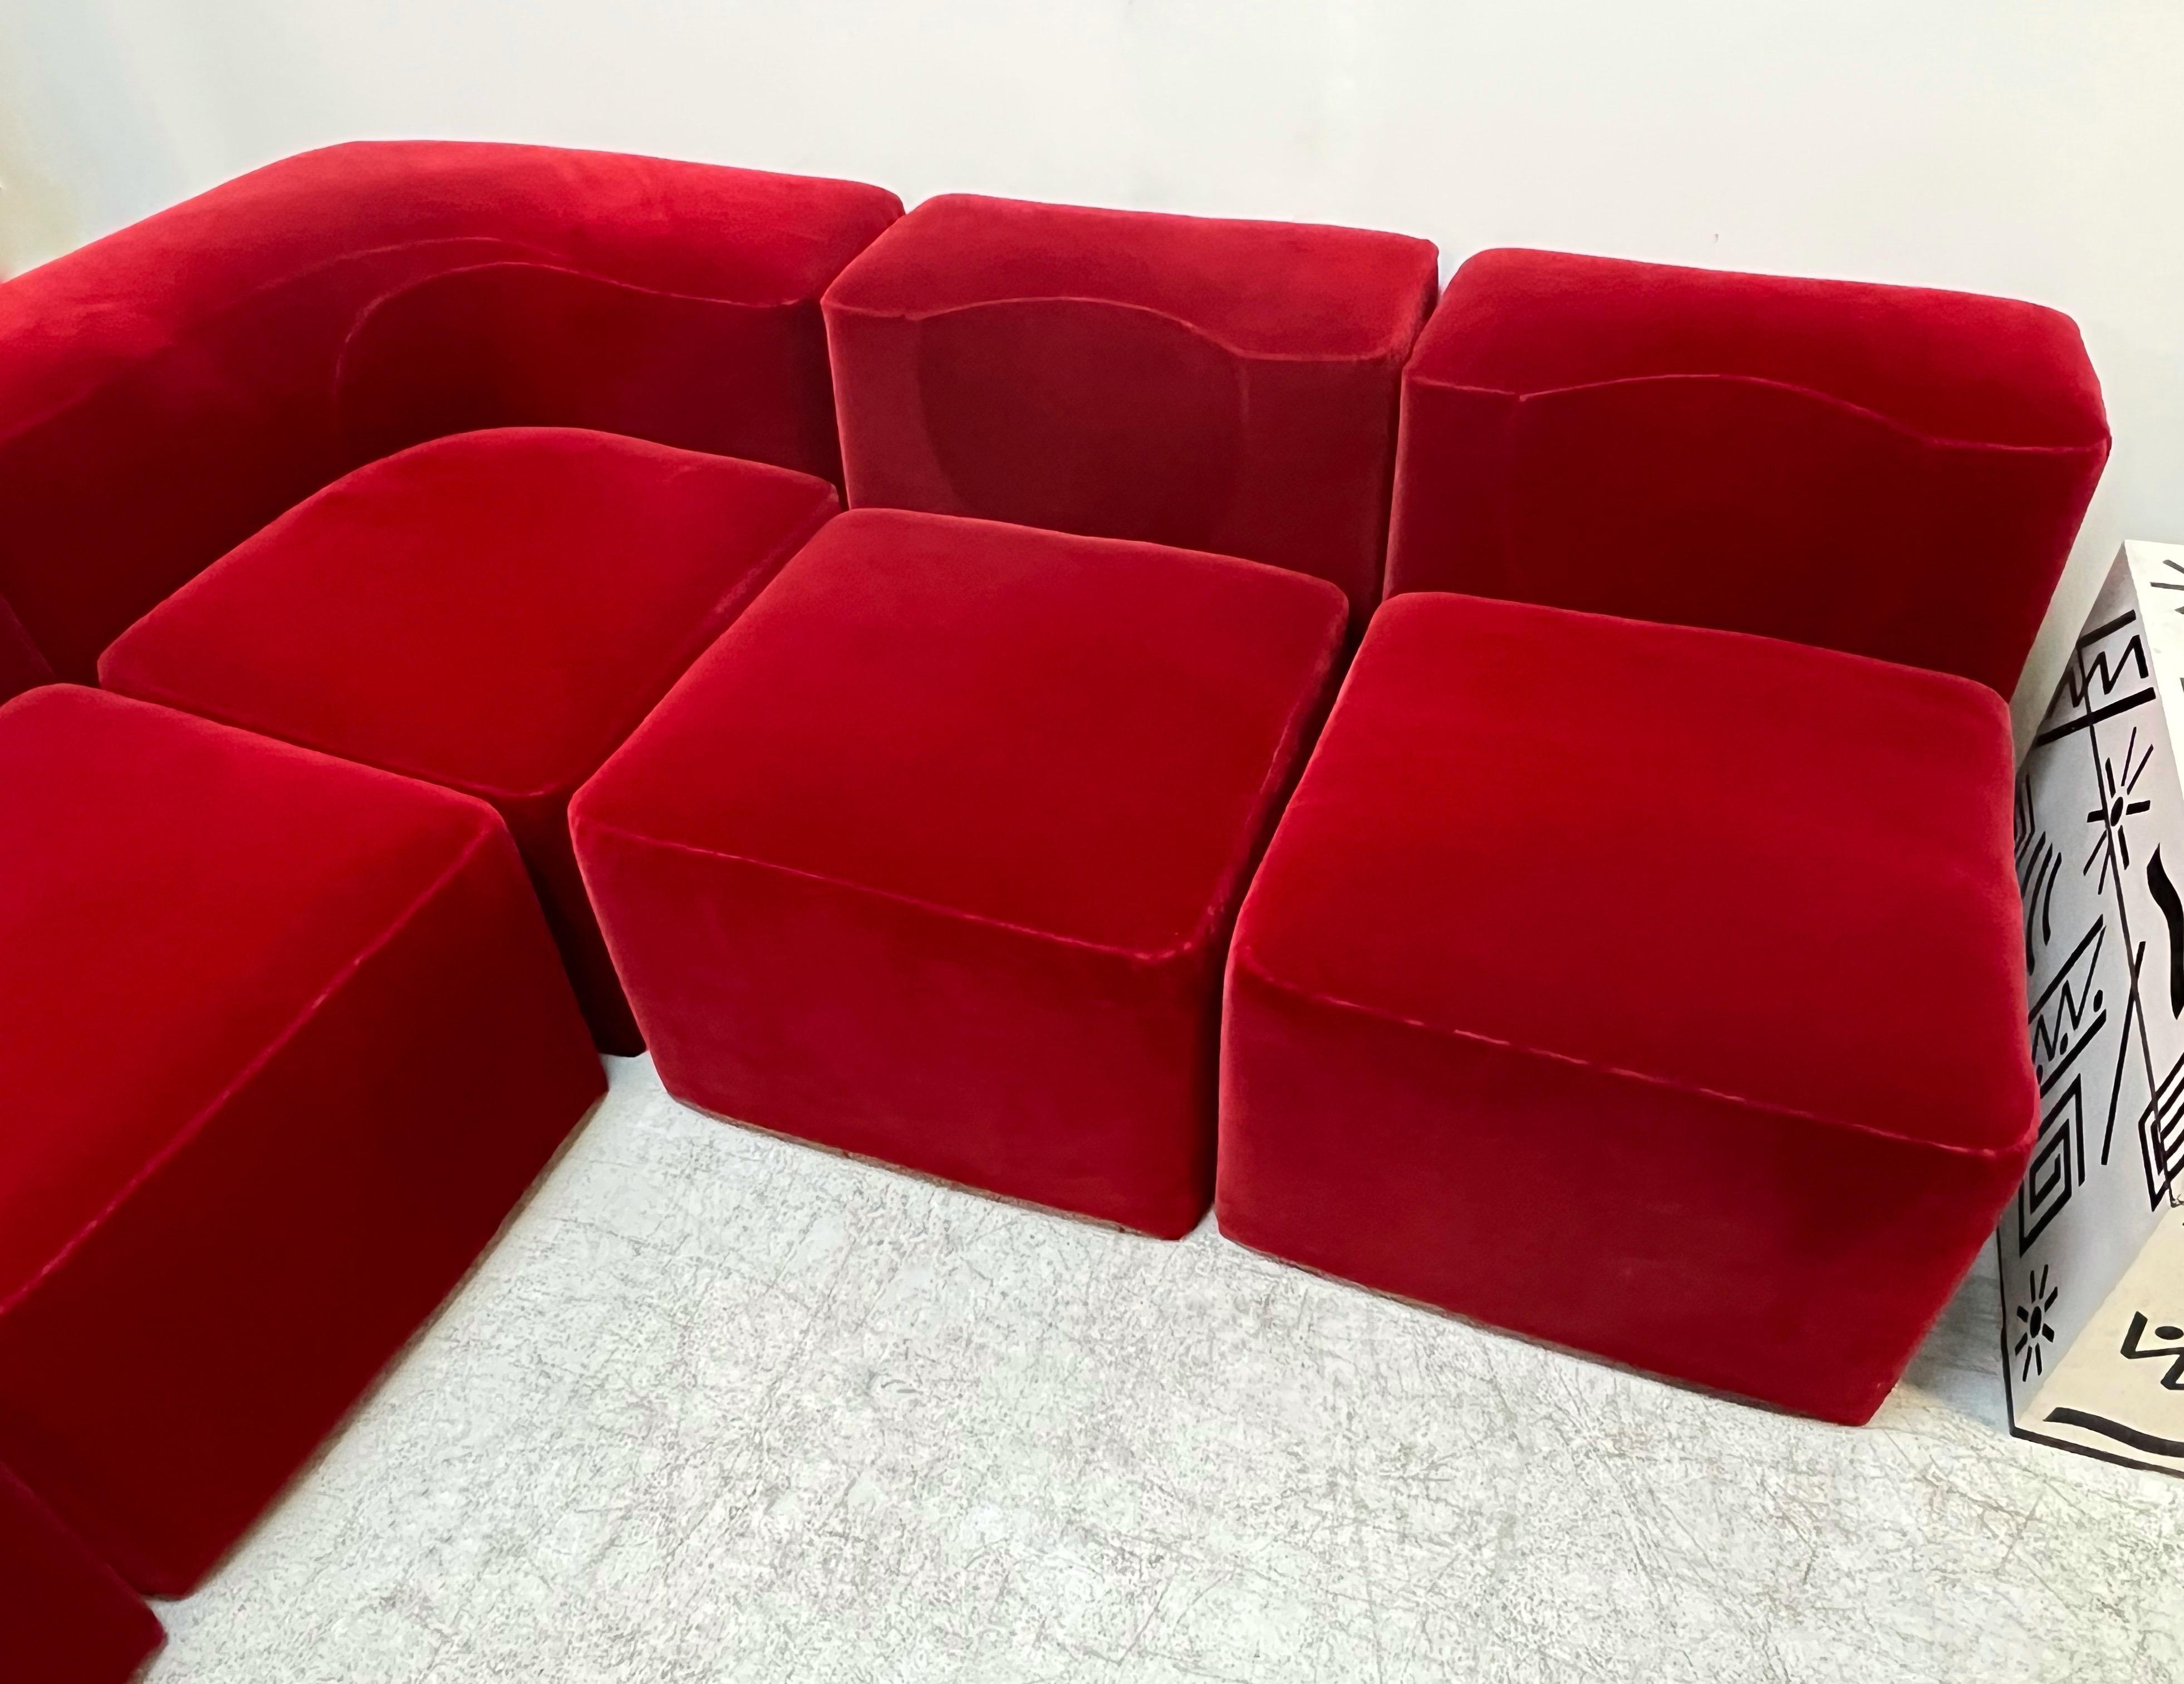 5 piece Sectional sofa by Guido Faleschini. Corner Section - 25.5 x 35.5 x 35.  Center Section - 25.5 x 24 x 35.